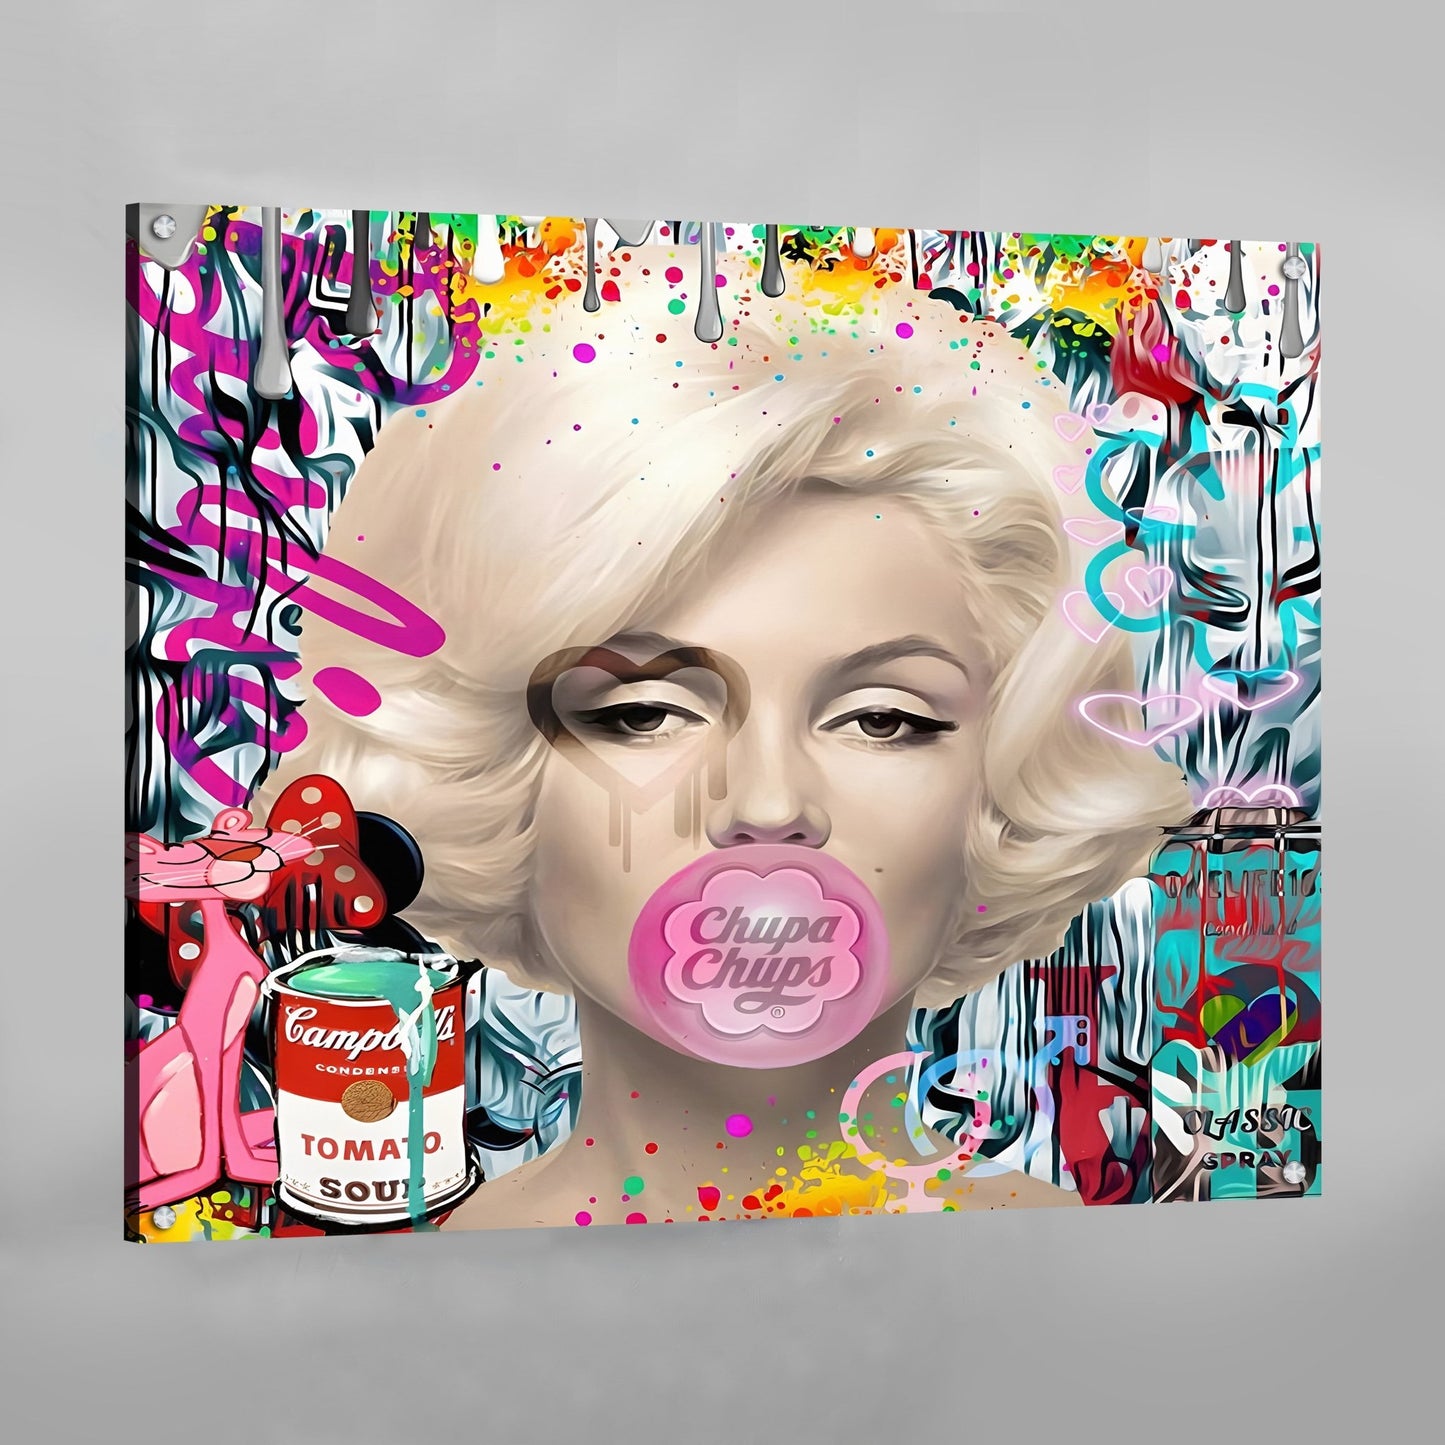 Marilyn Monroe Pop Art Canvas - Luxury Art Canvas